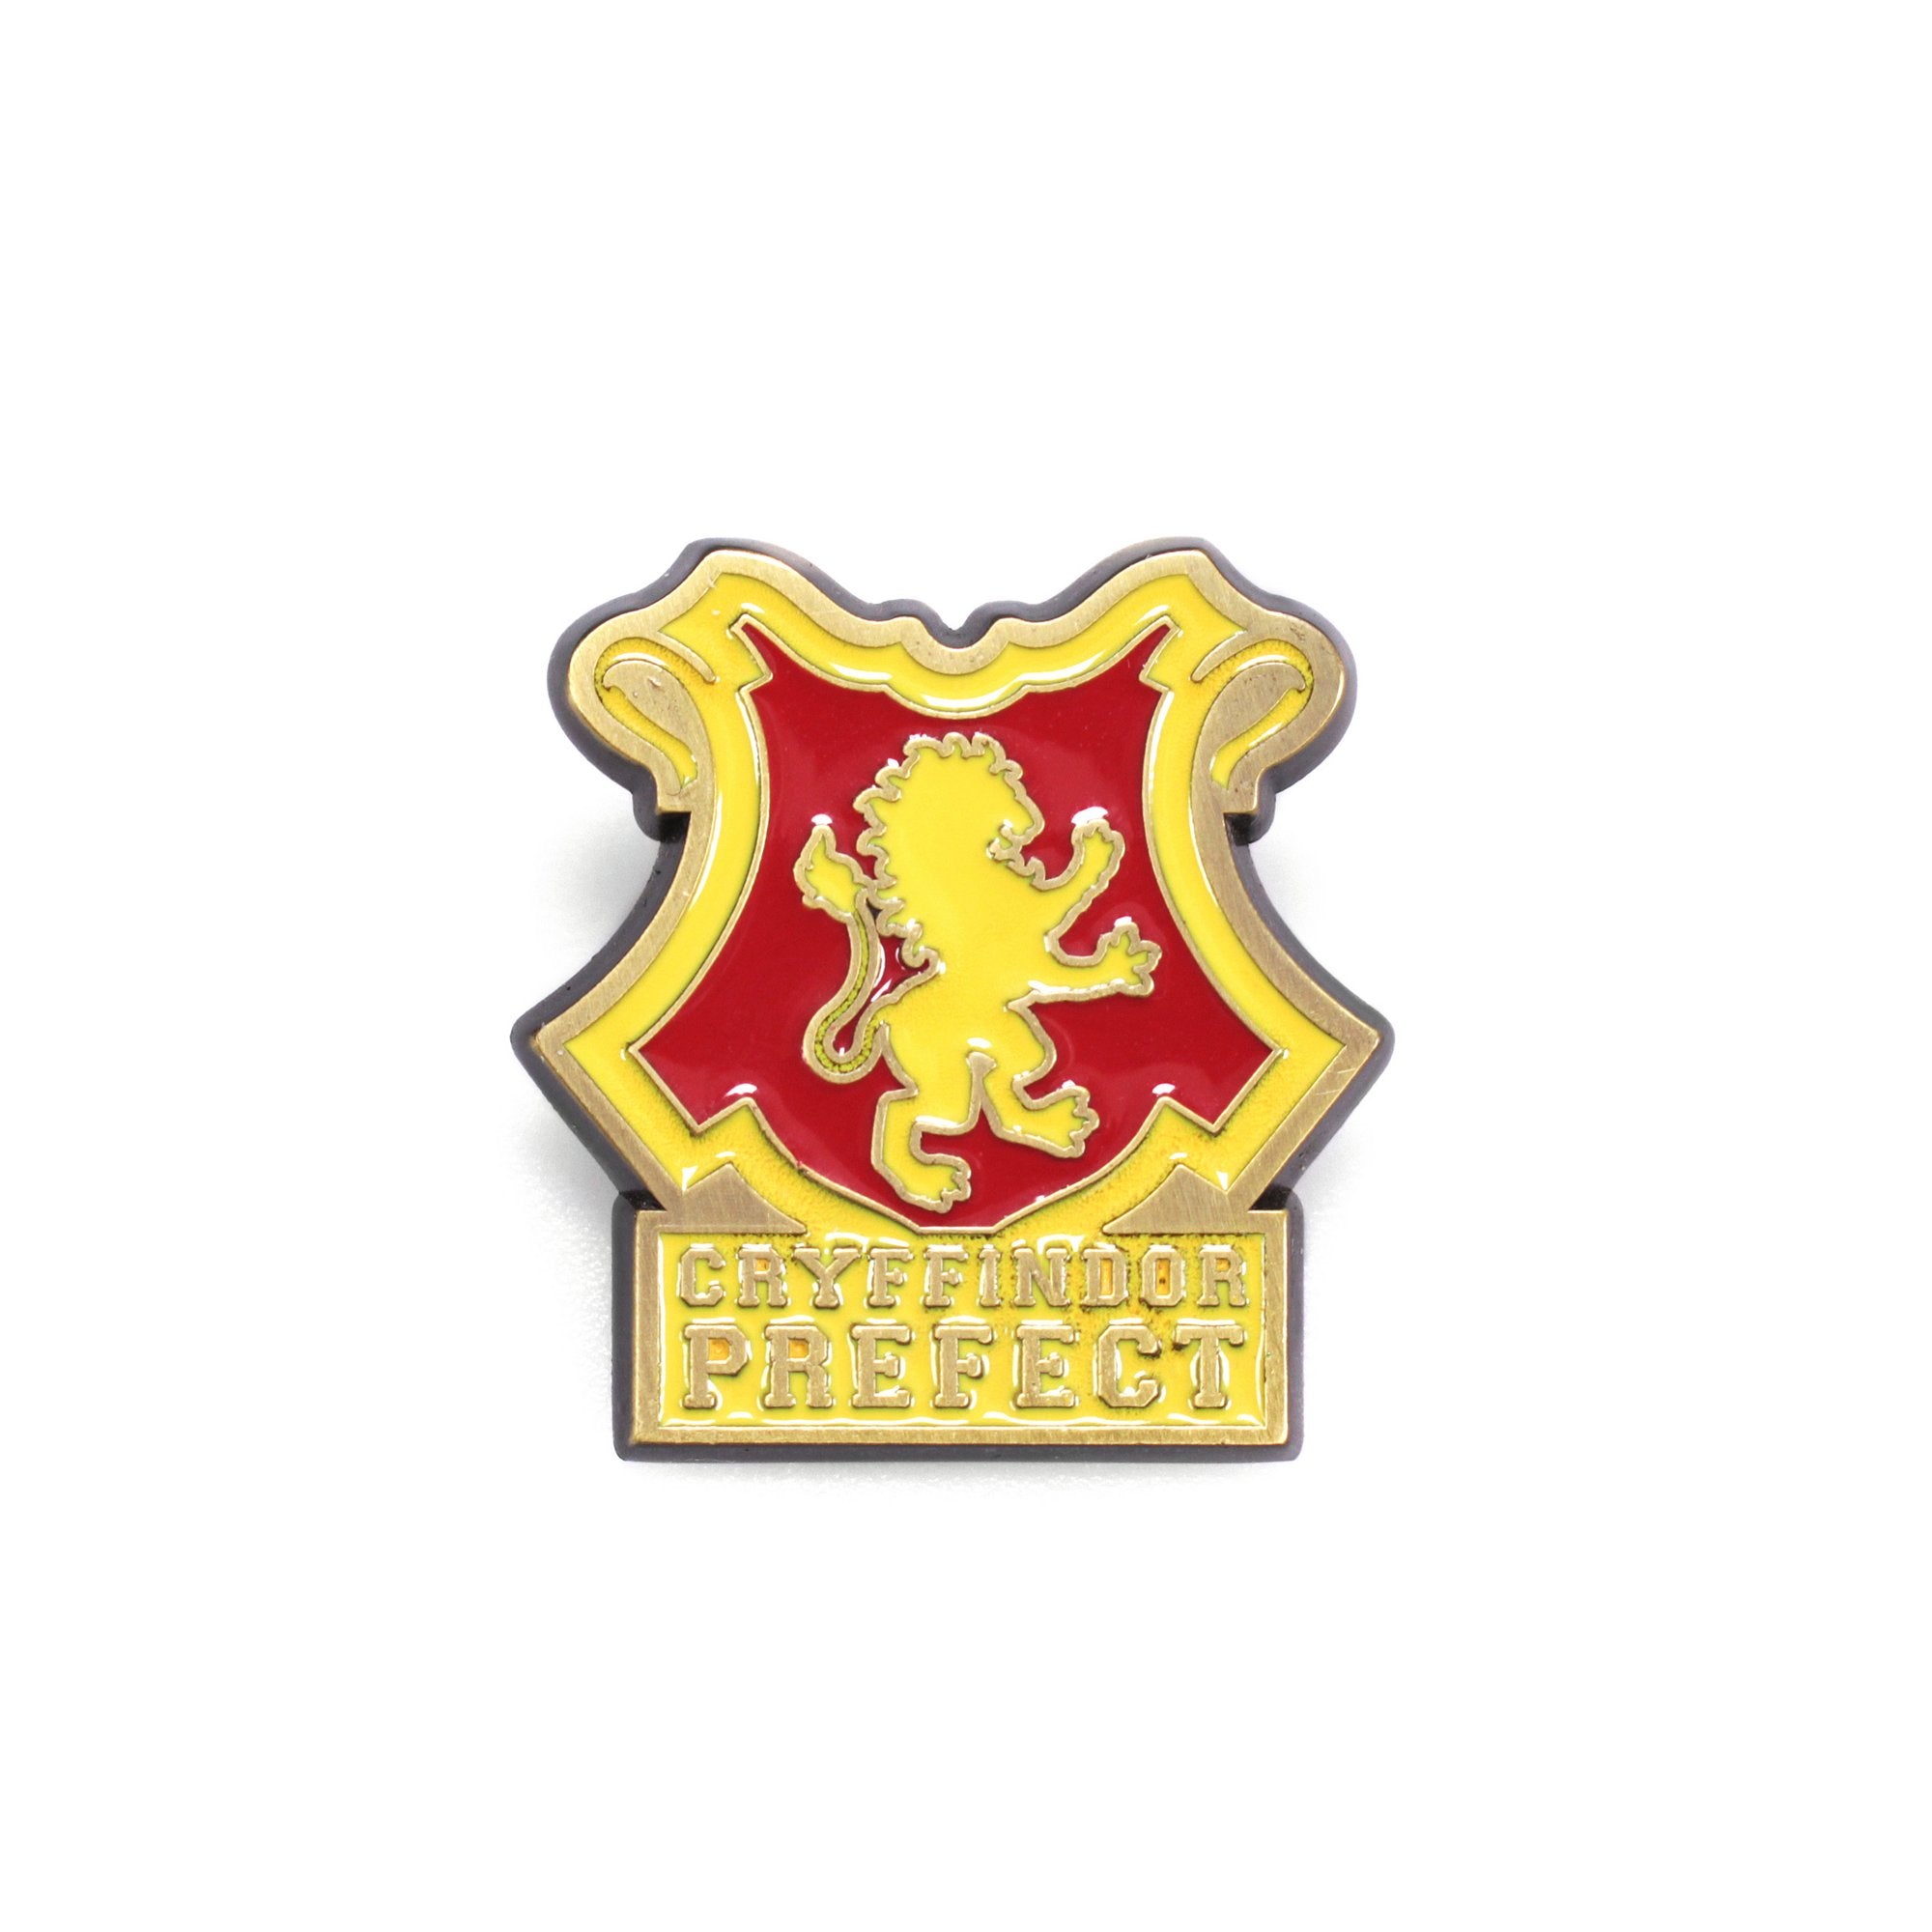 Harry Potter Pin Badge - Gryffindor Prefect